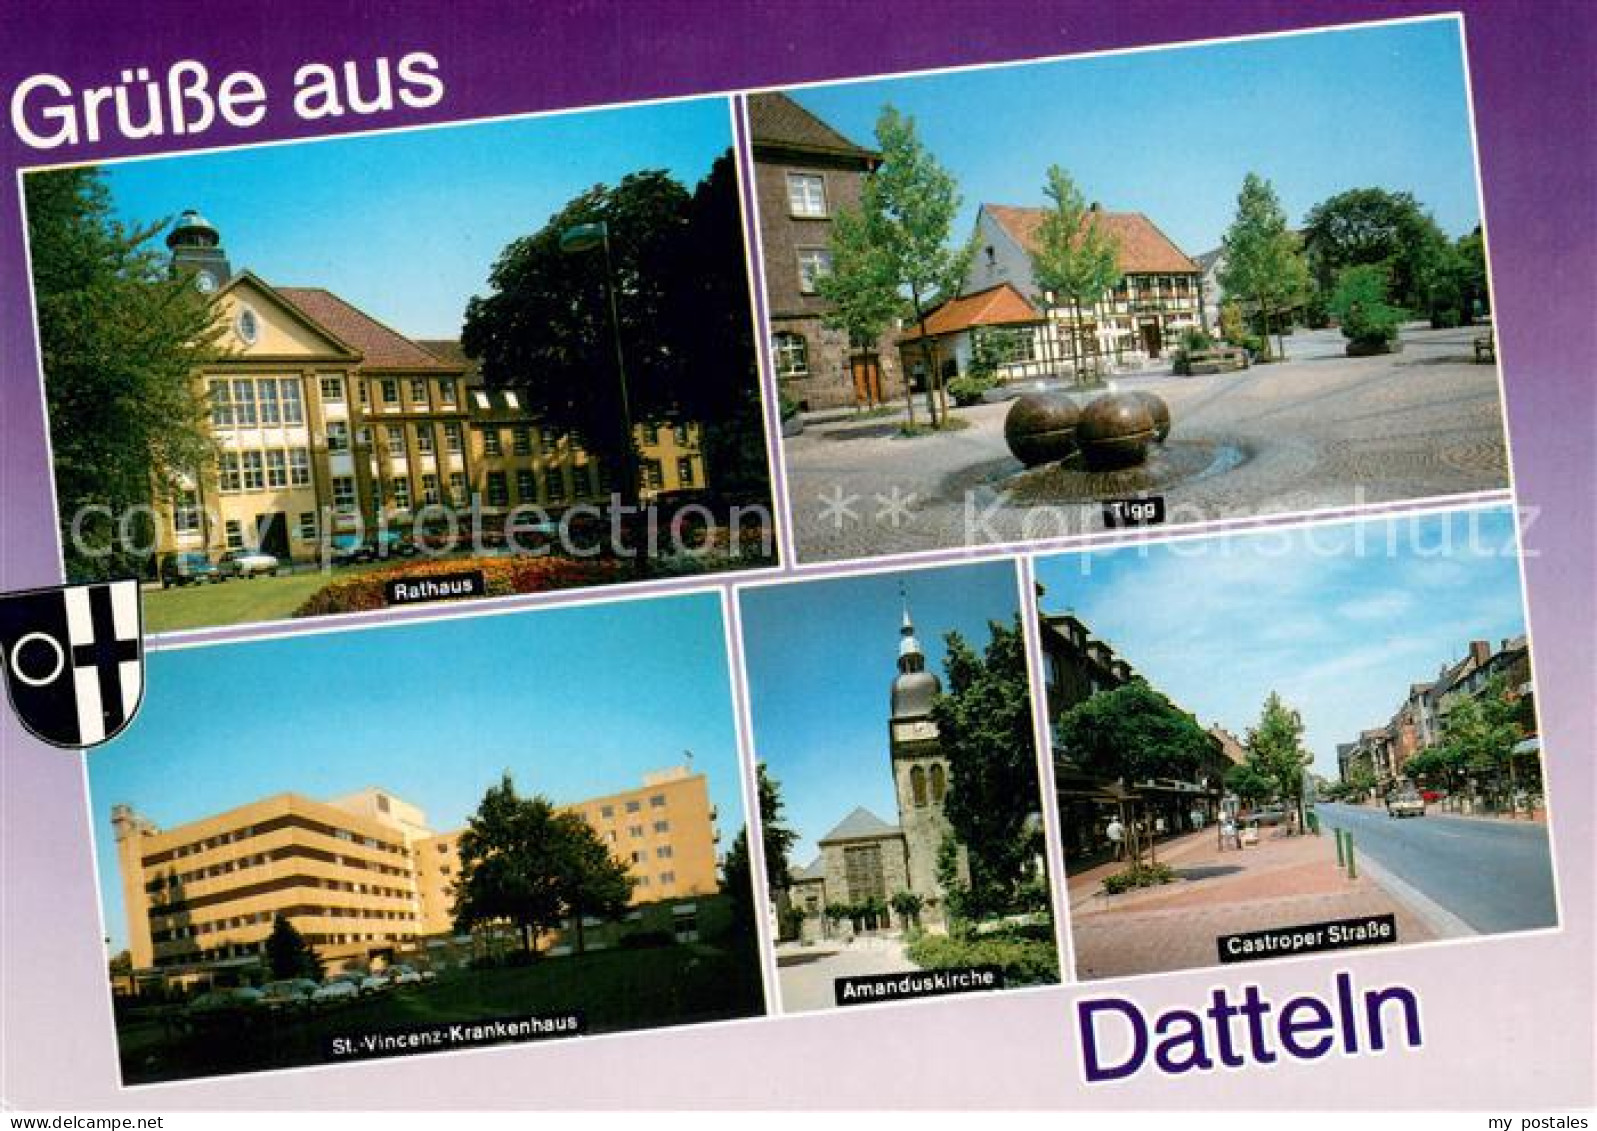 73673270 Datteln Rathaus Strasse Tigg Platz Brunnen Castroper Strasse Amanduskir - Datteln